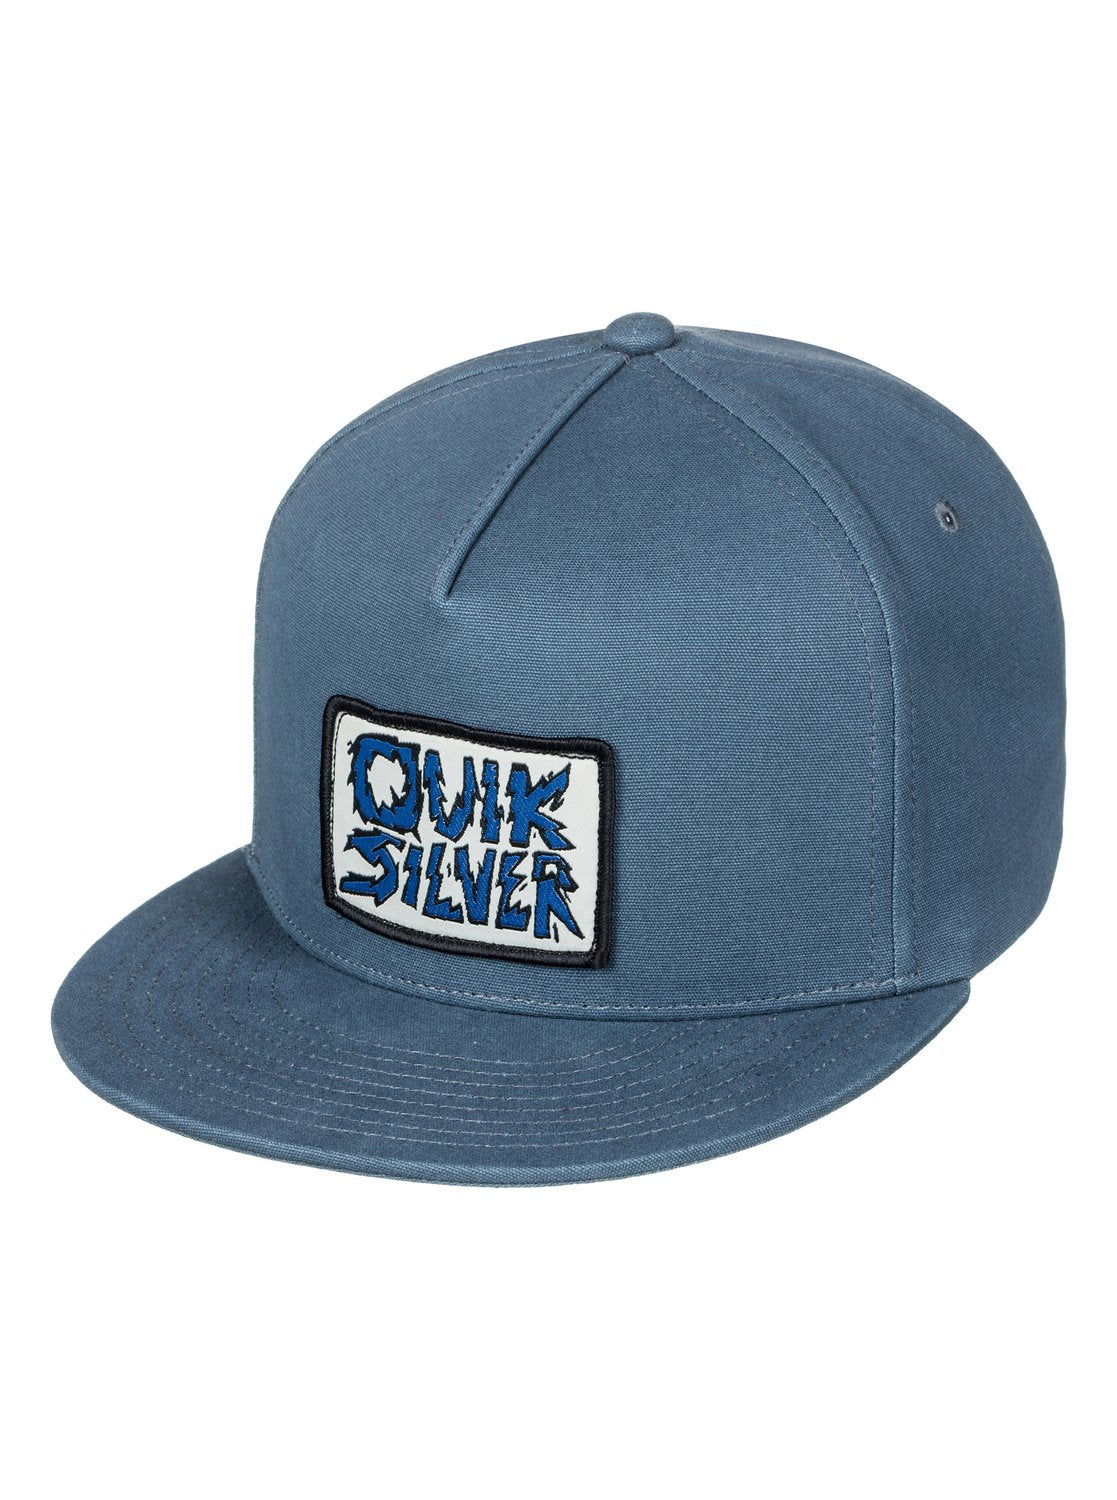 Quiksilver Boys Smorgasborg Snapback Hat